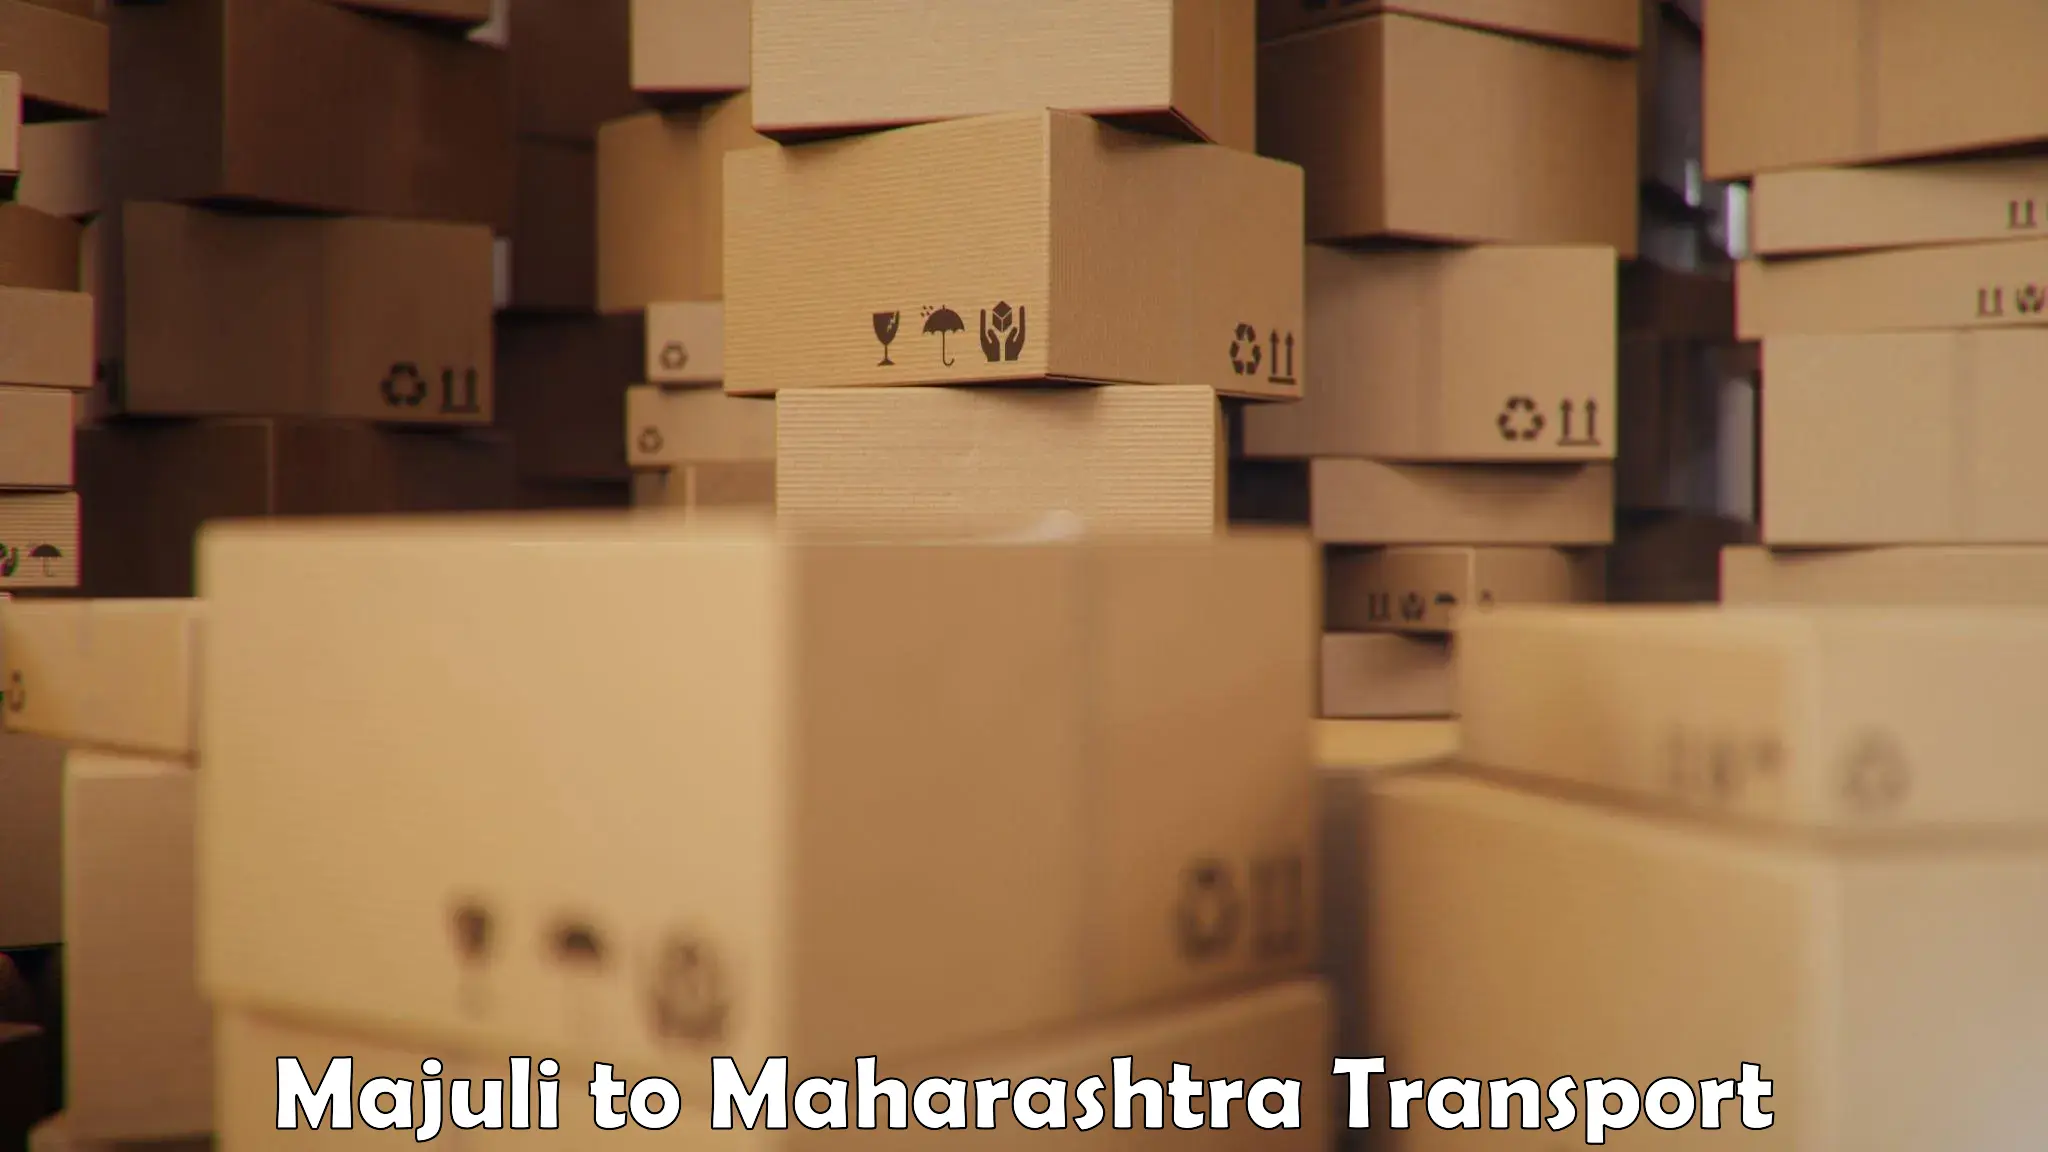 Truck transport companies in India Majuli to Raigarh Maharashtra